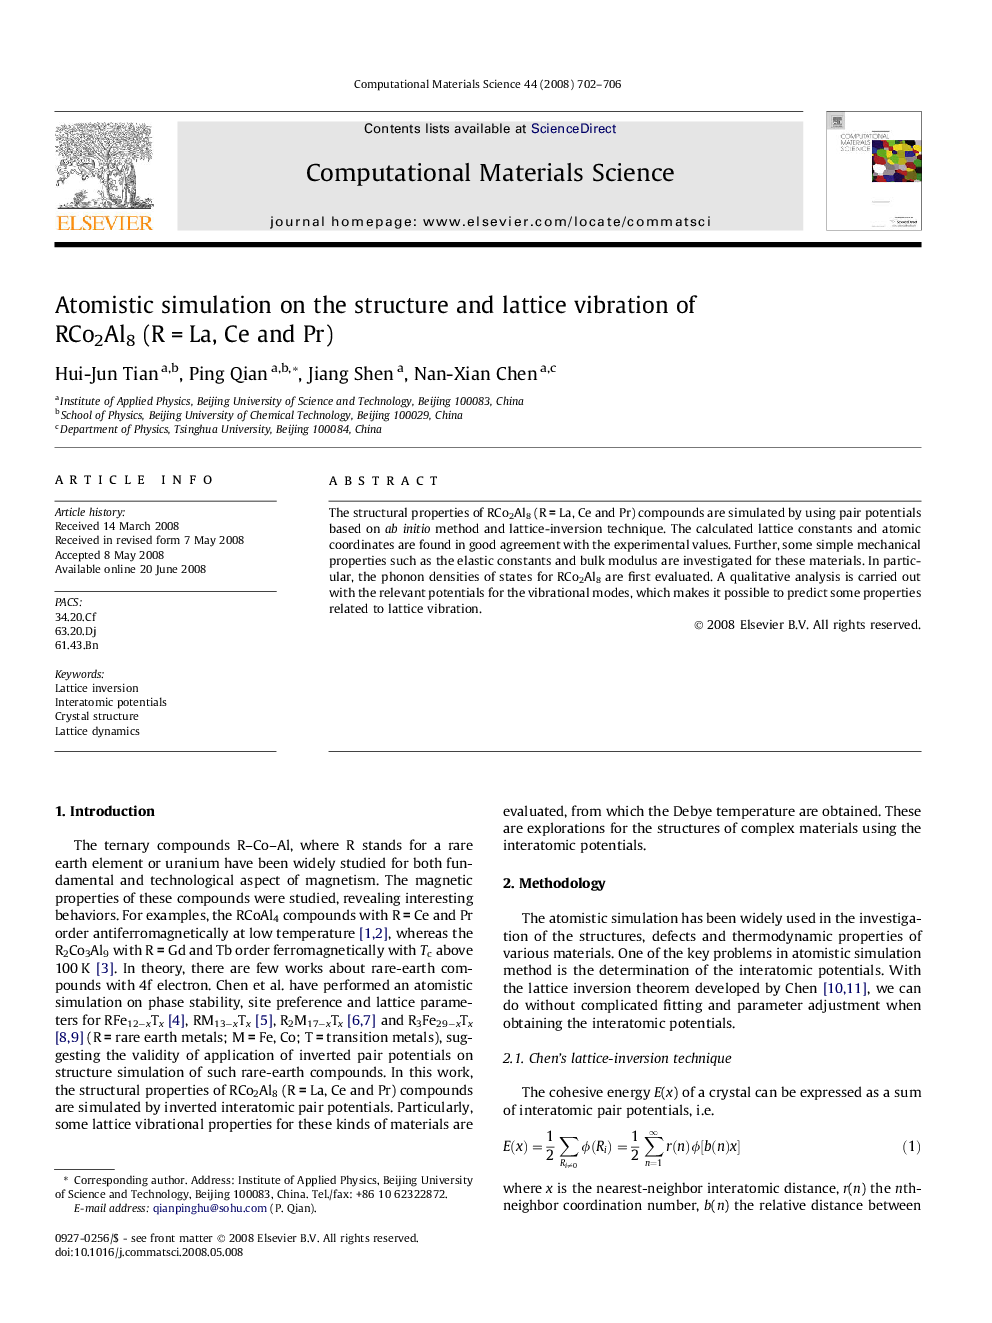 Atomistic simulation on the structure and lattice vibration of RCo2Al8 (RÂ =Â La, Ce and Pr)